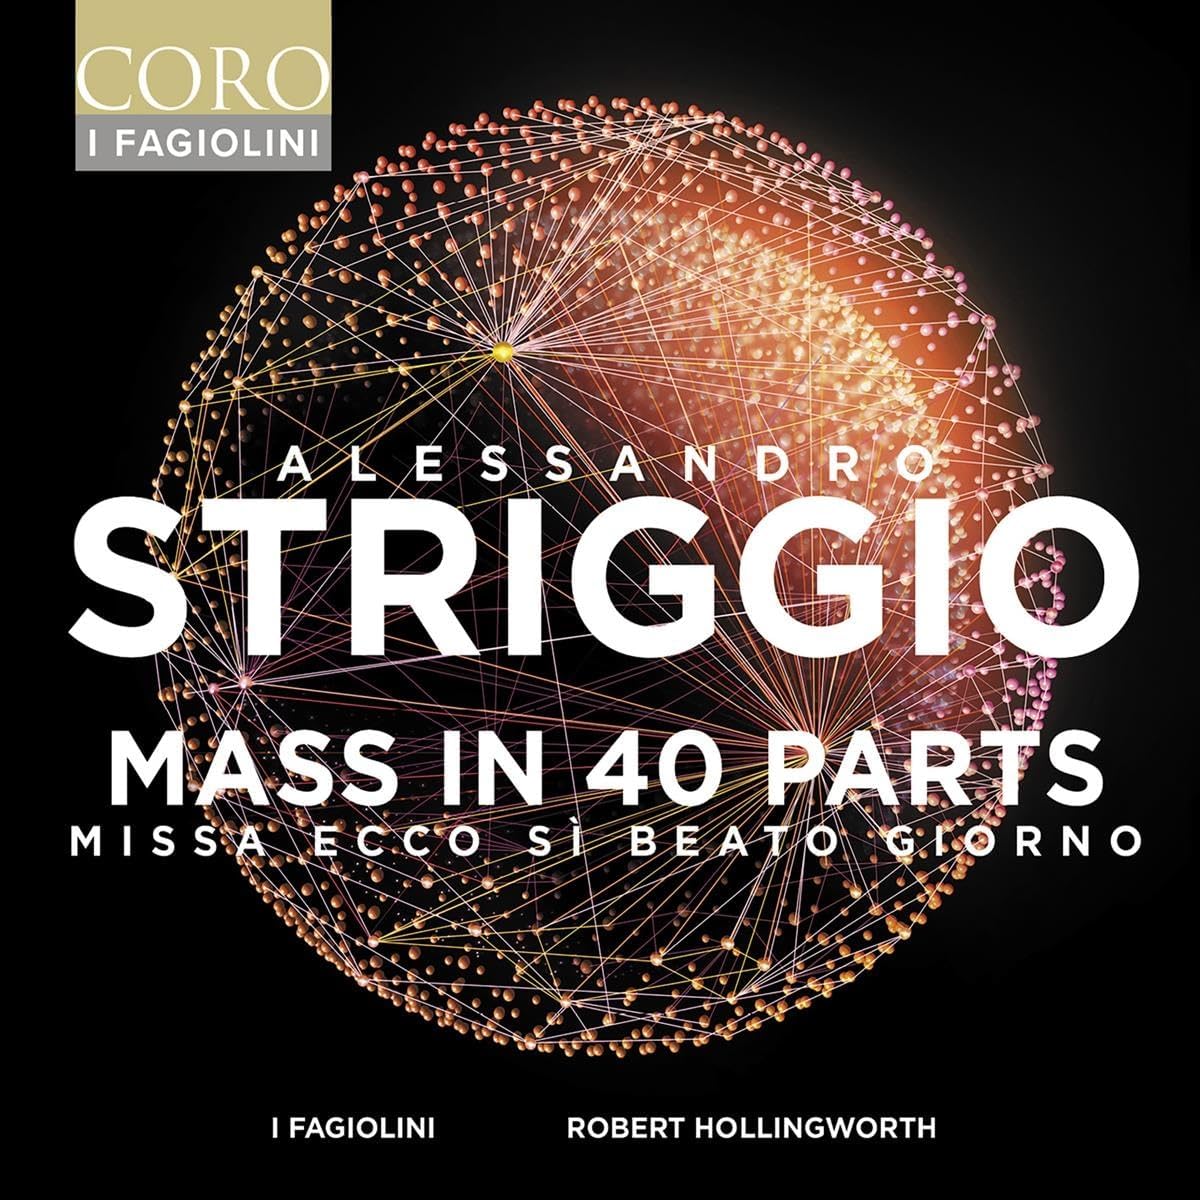 Striggio mass 40